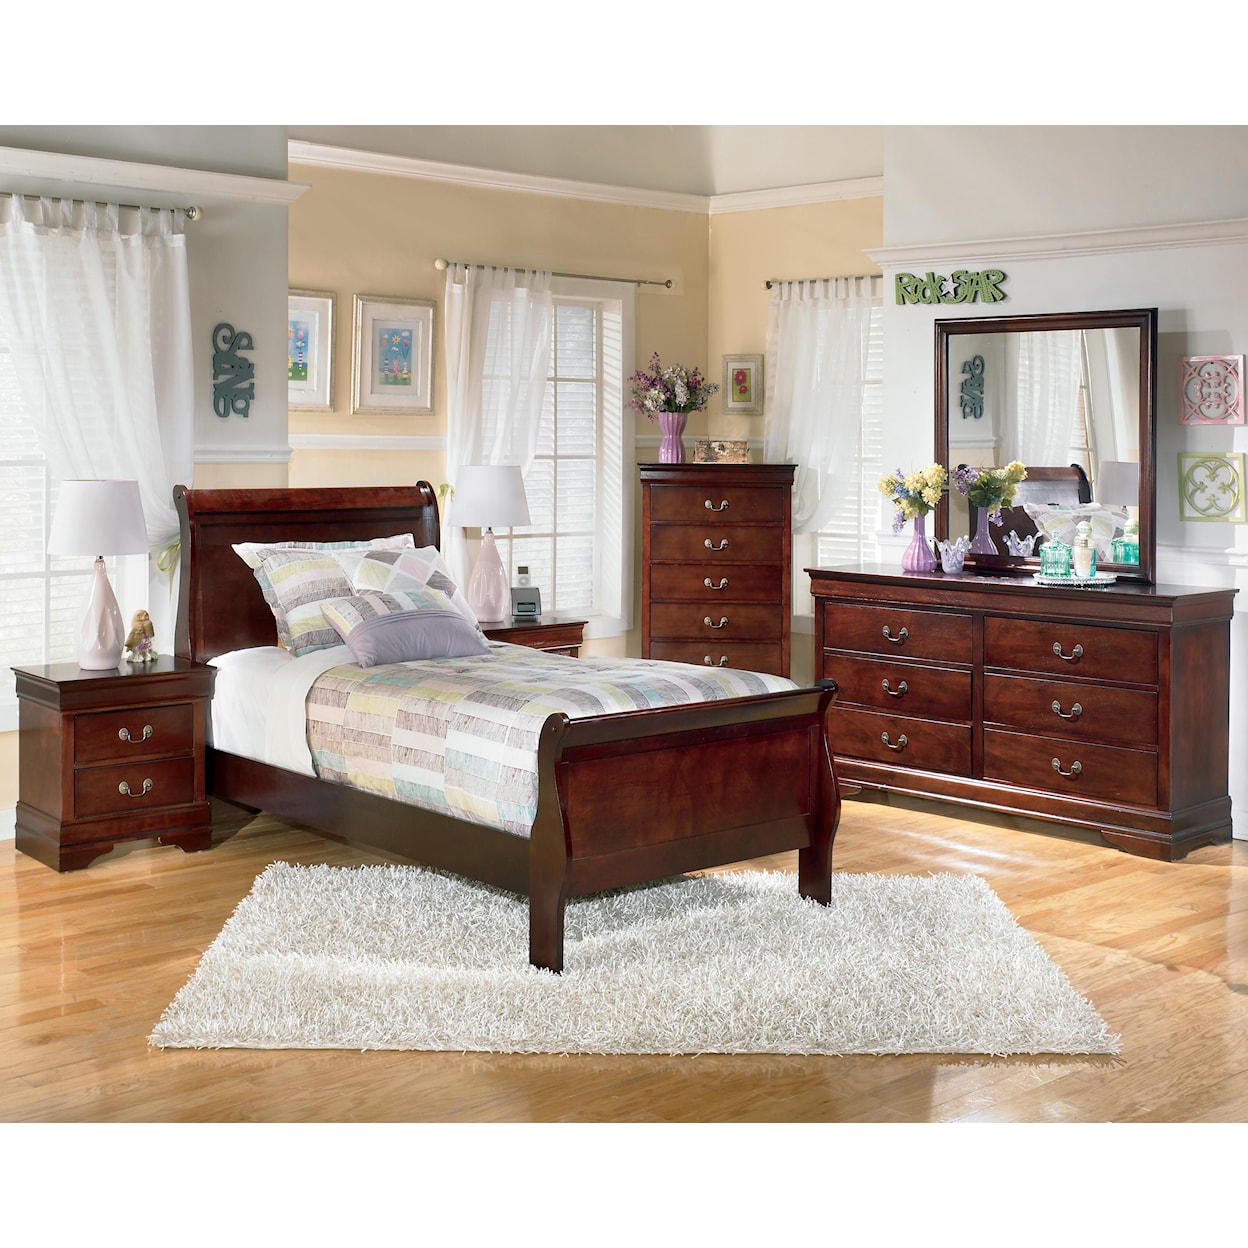 Ashley Furniture Signature Design Alisdair 5 Piece Twin Bedroom Group